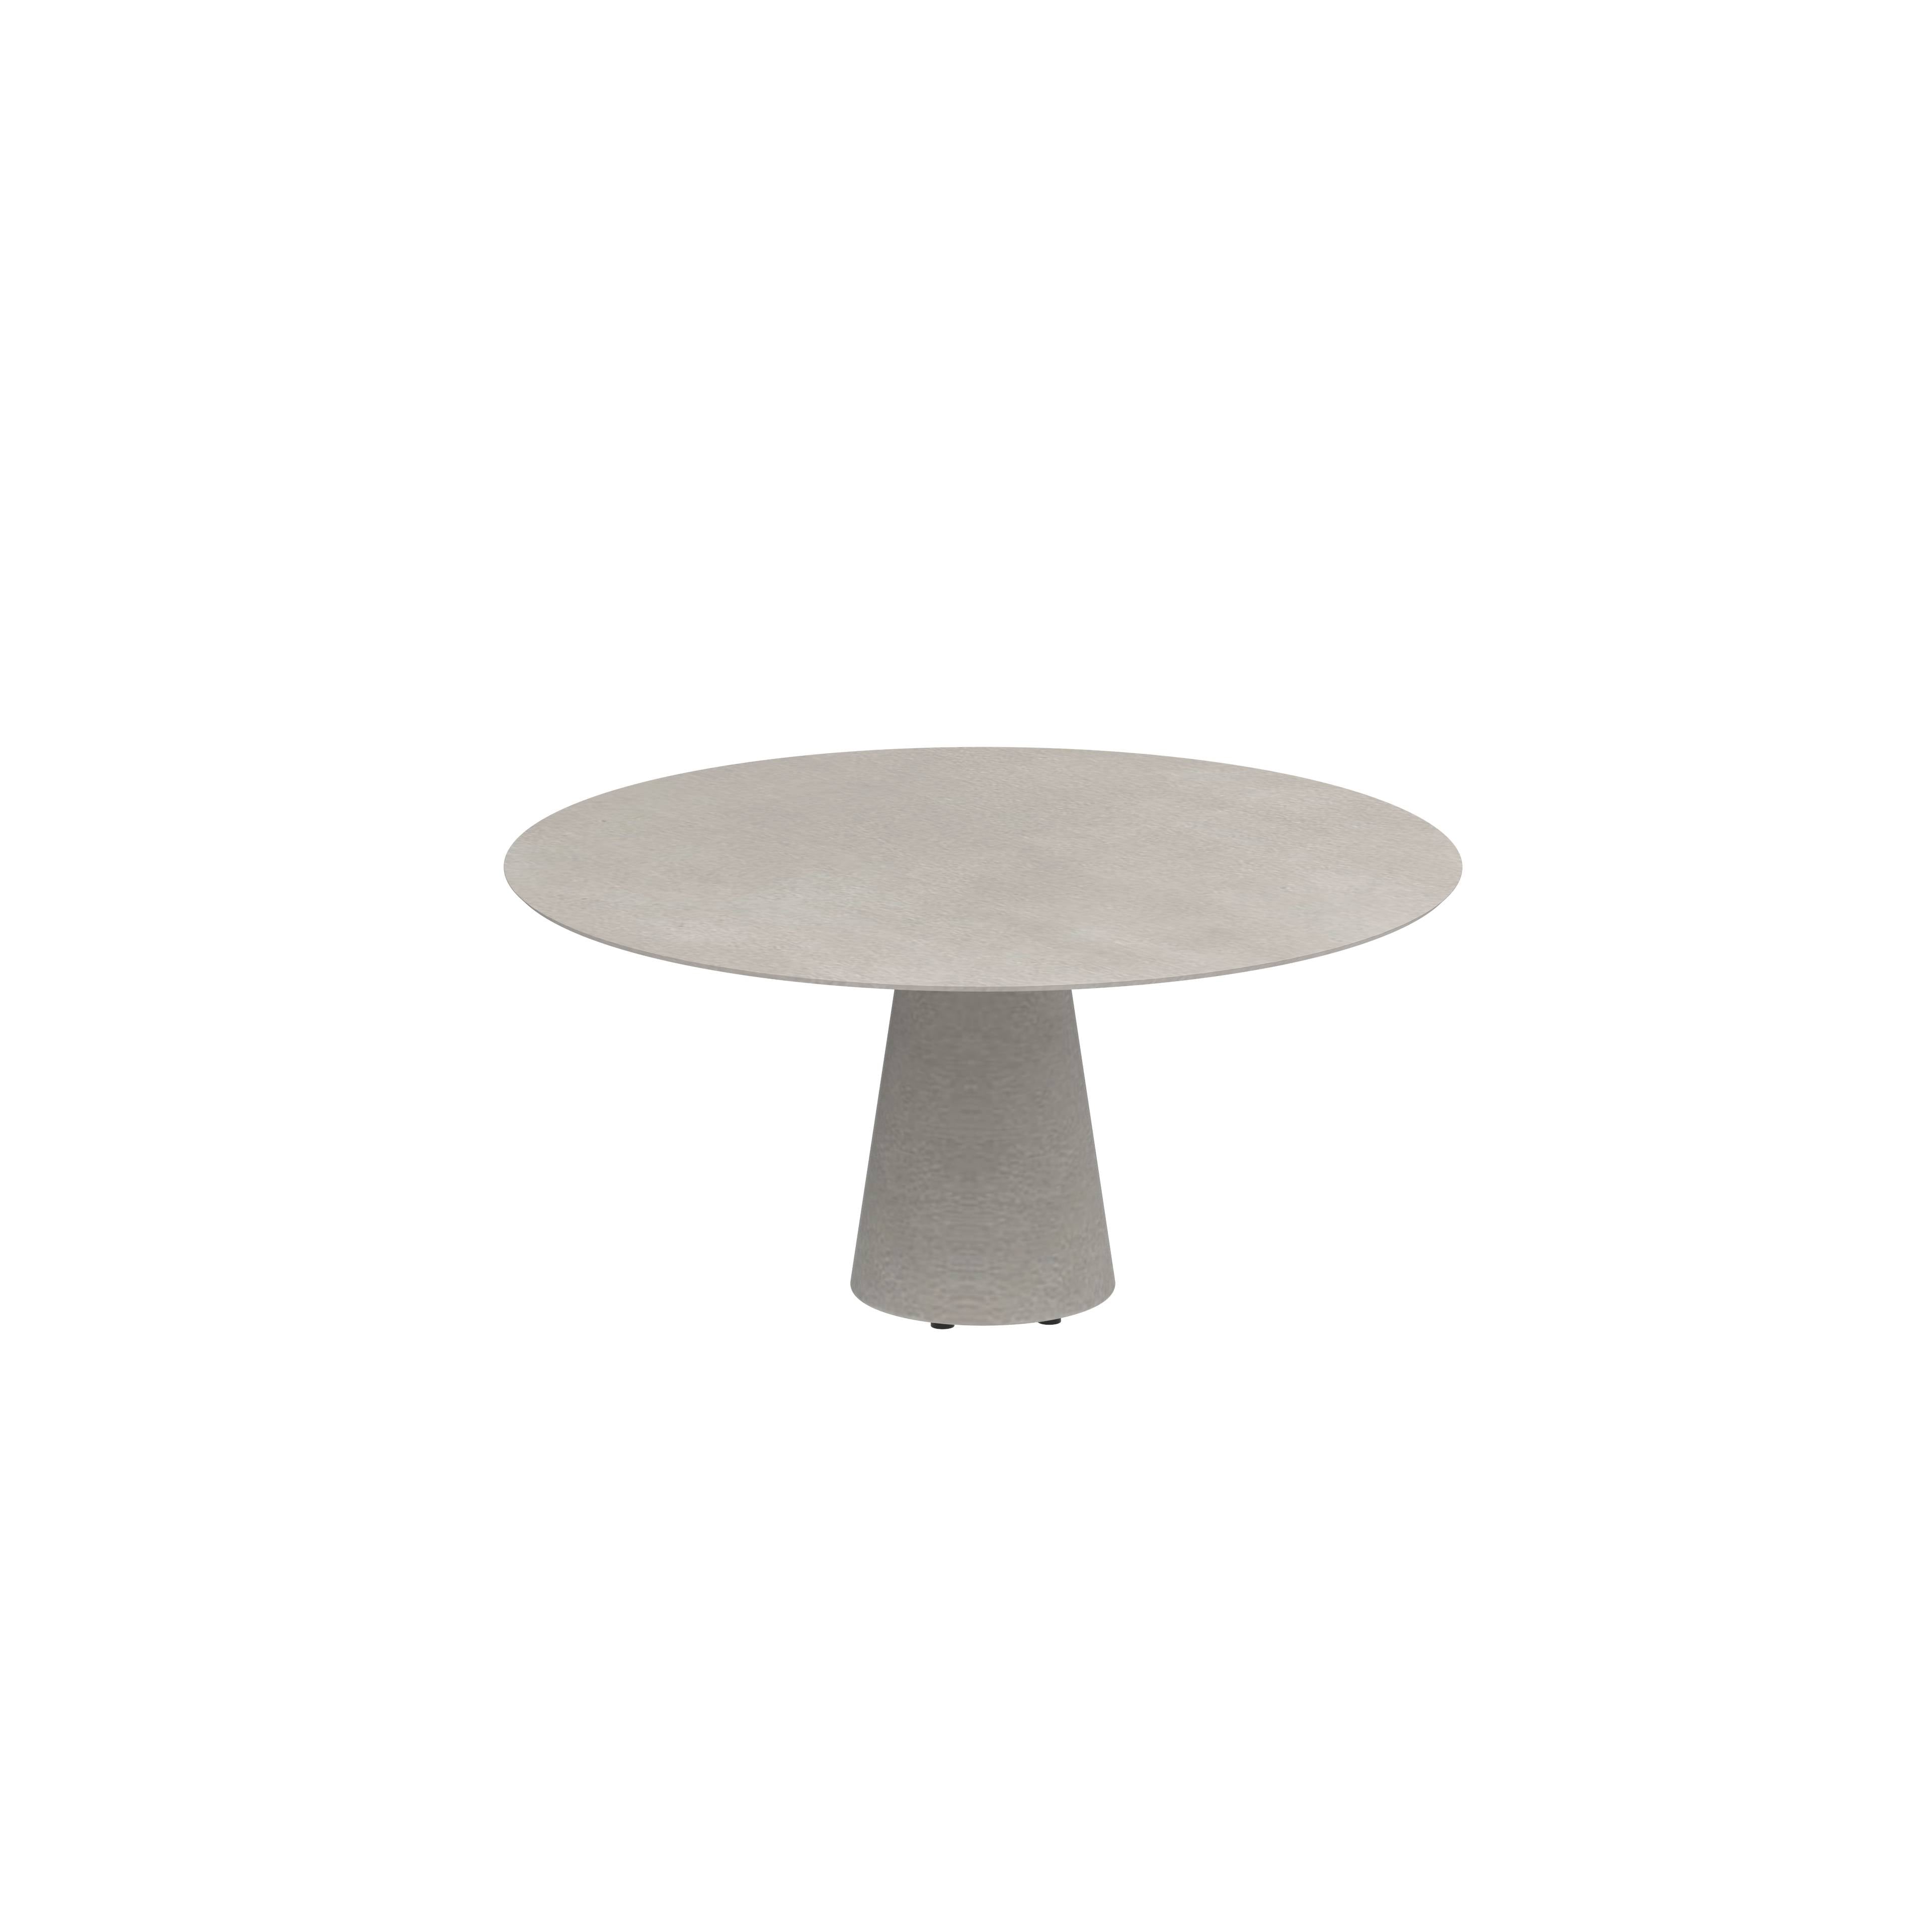 Conix Table Round Ø 160cm Legs Concrete Cement Grey - Tabletop Ceramic Cemento Luminoso